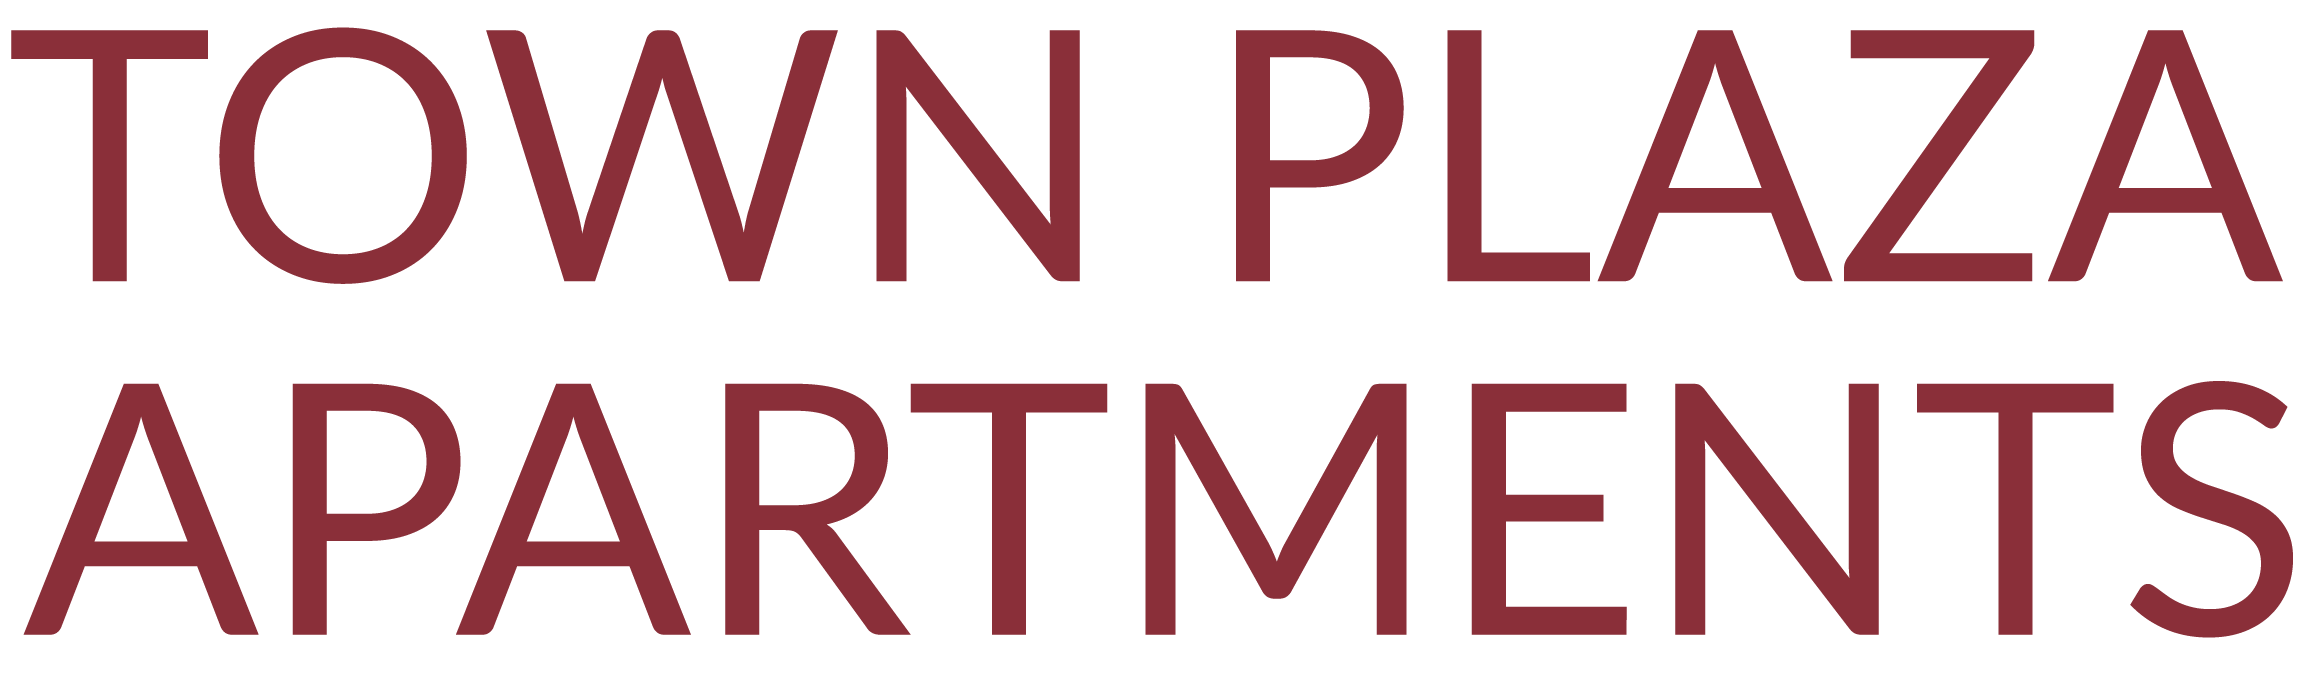 Town Plaza Apartments Promotional Logo